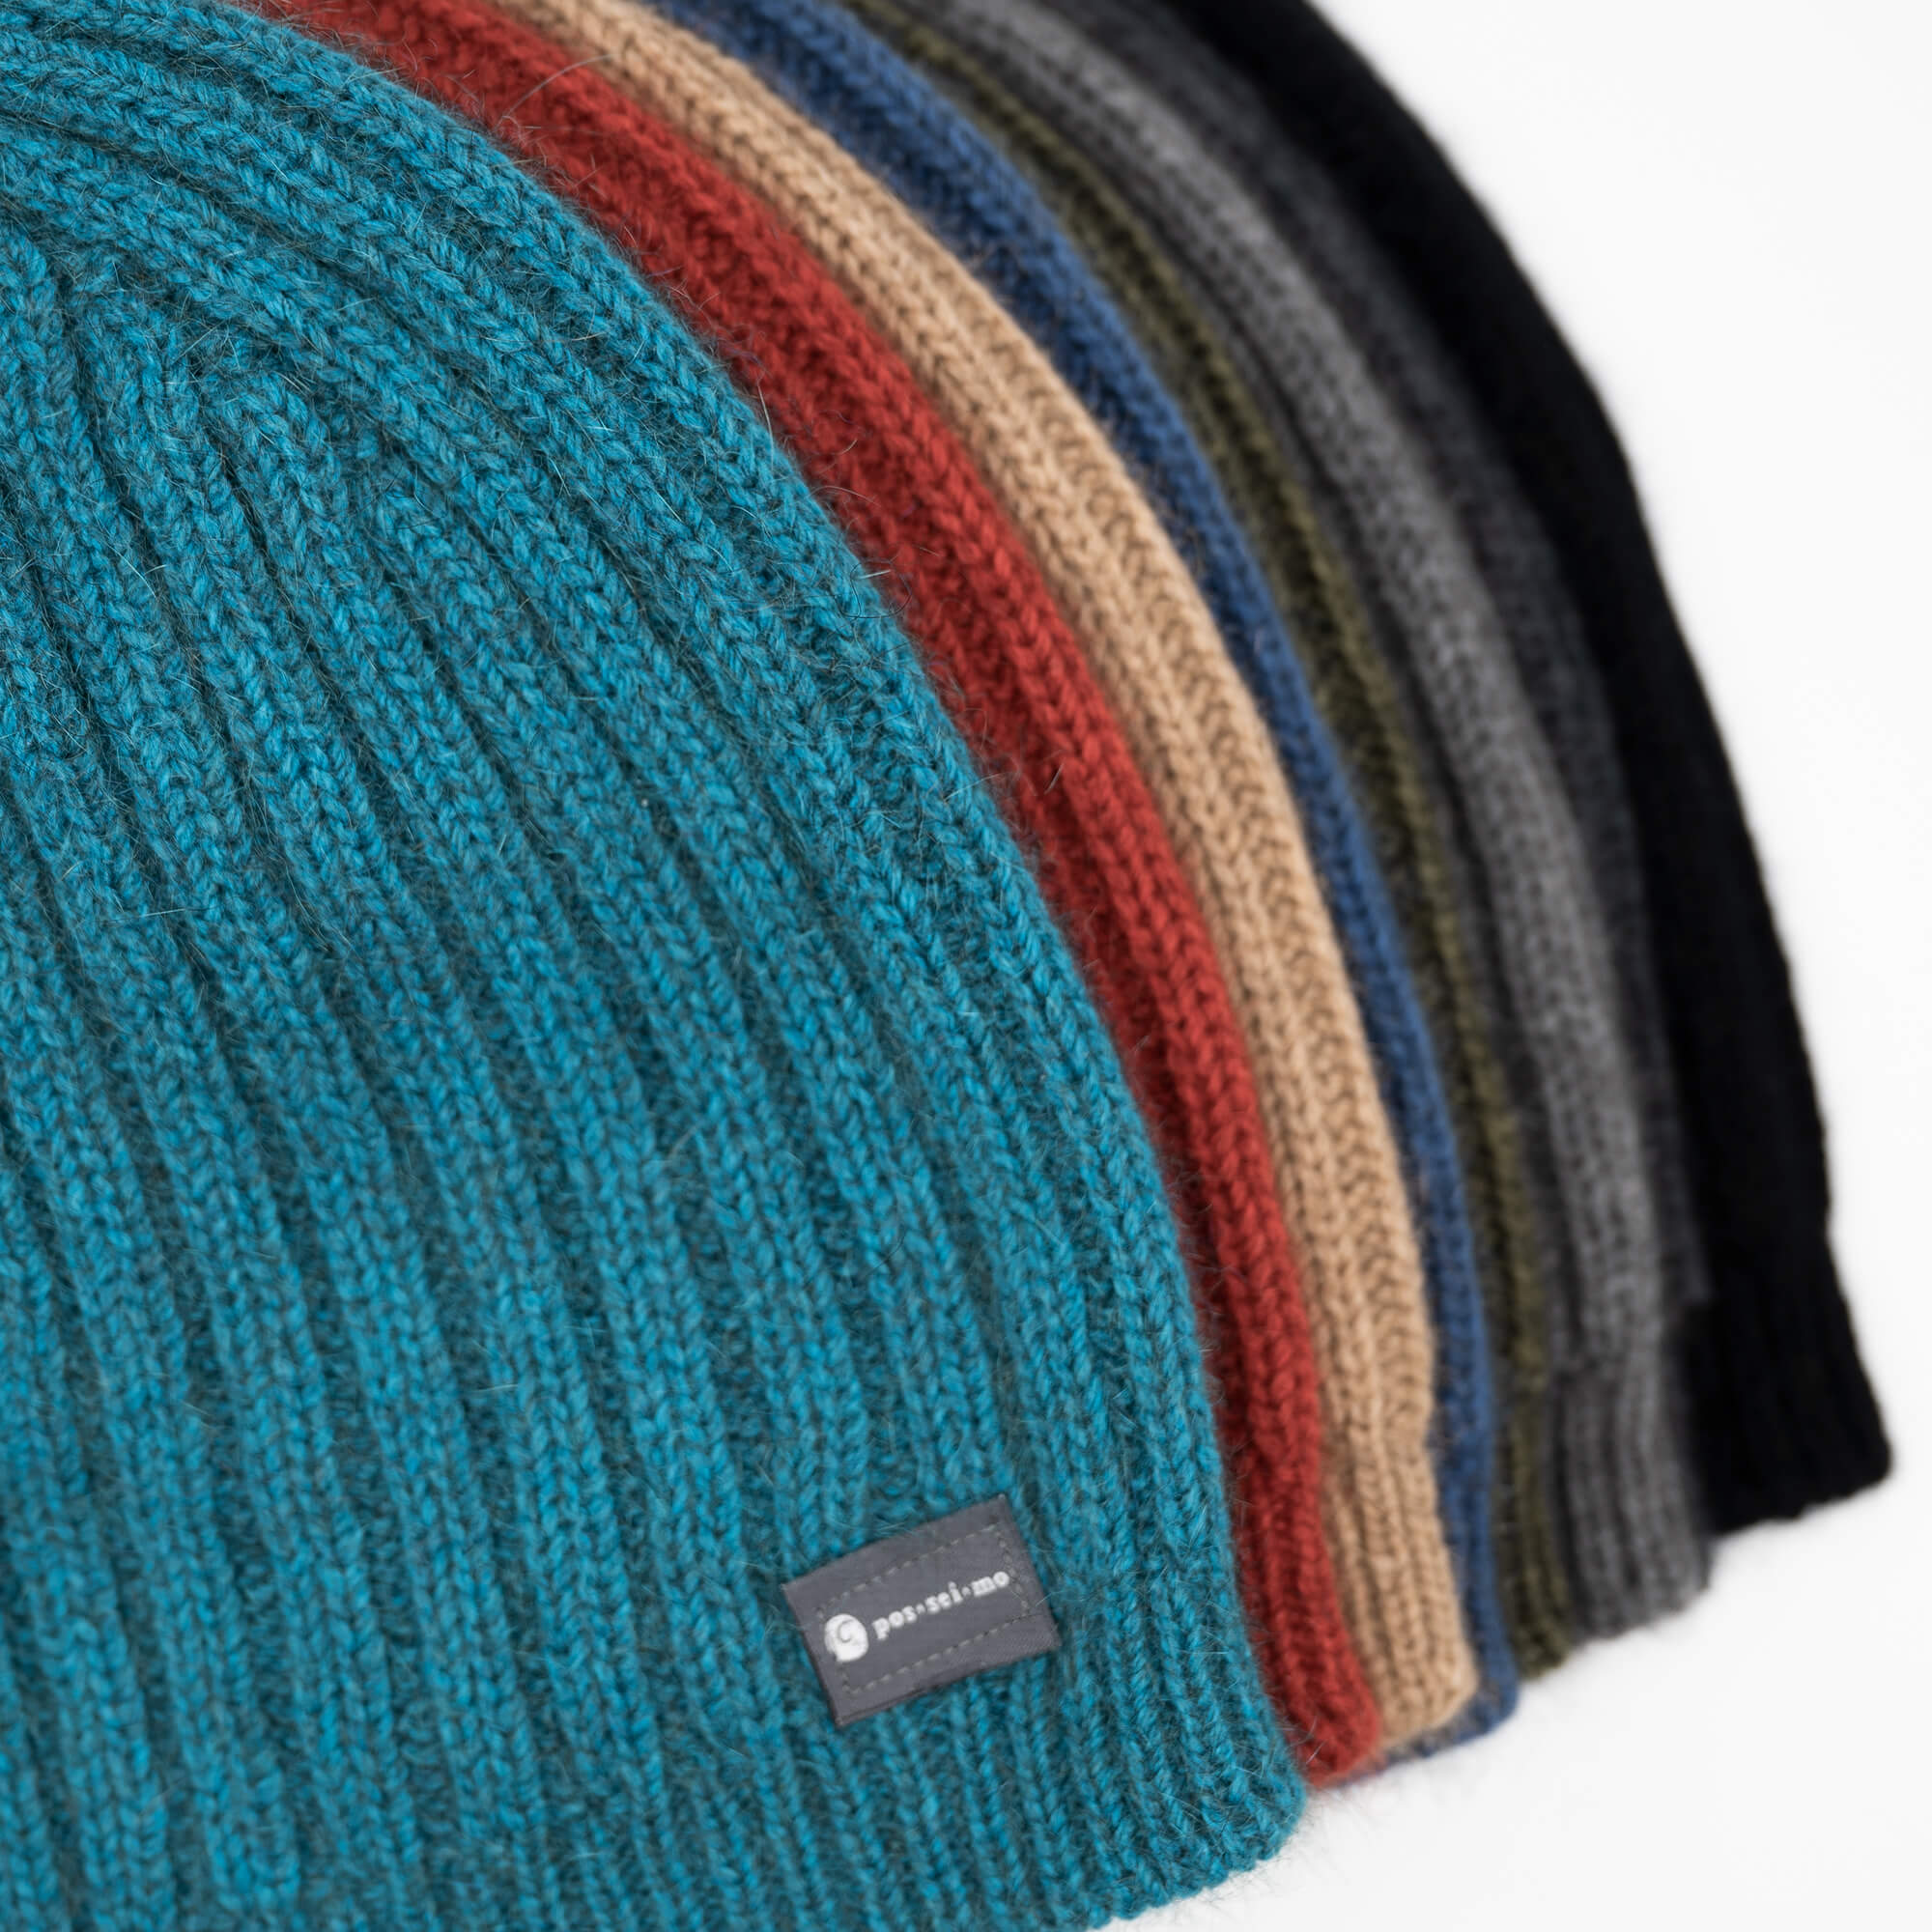 Ripp-Mütze - seamless knitting